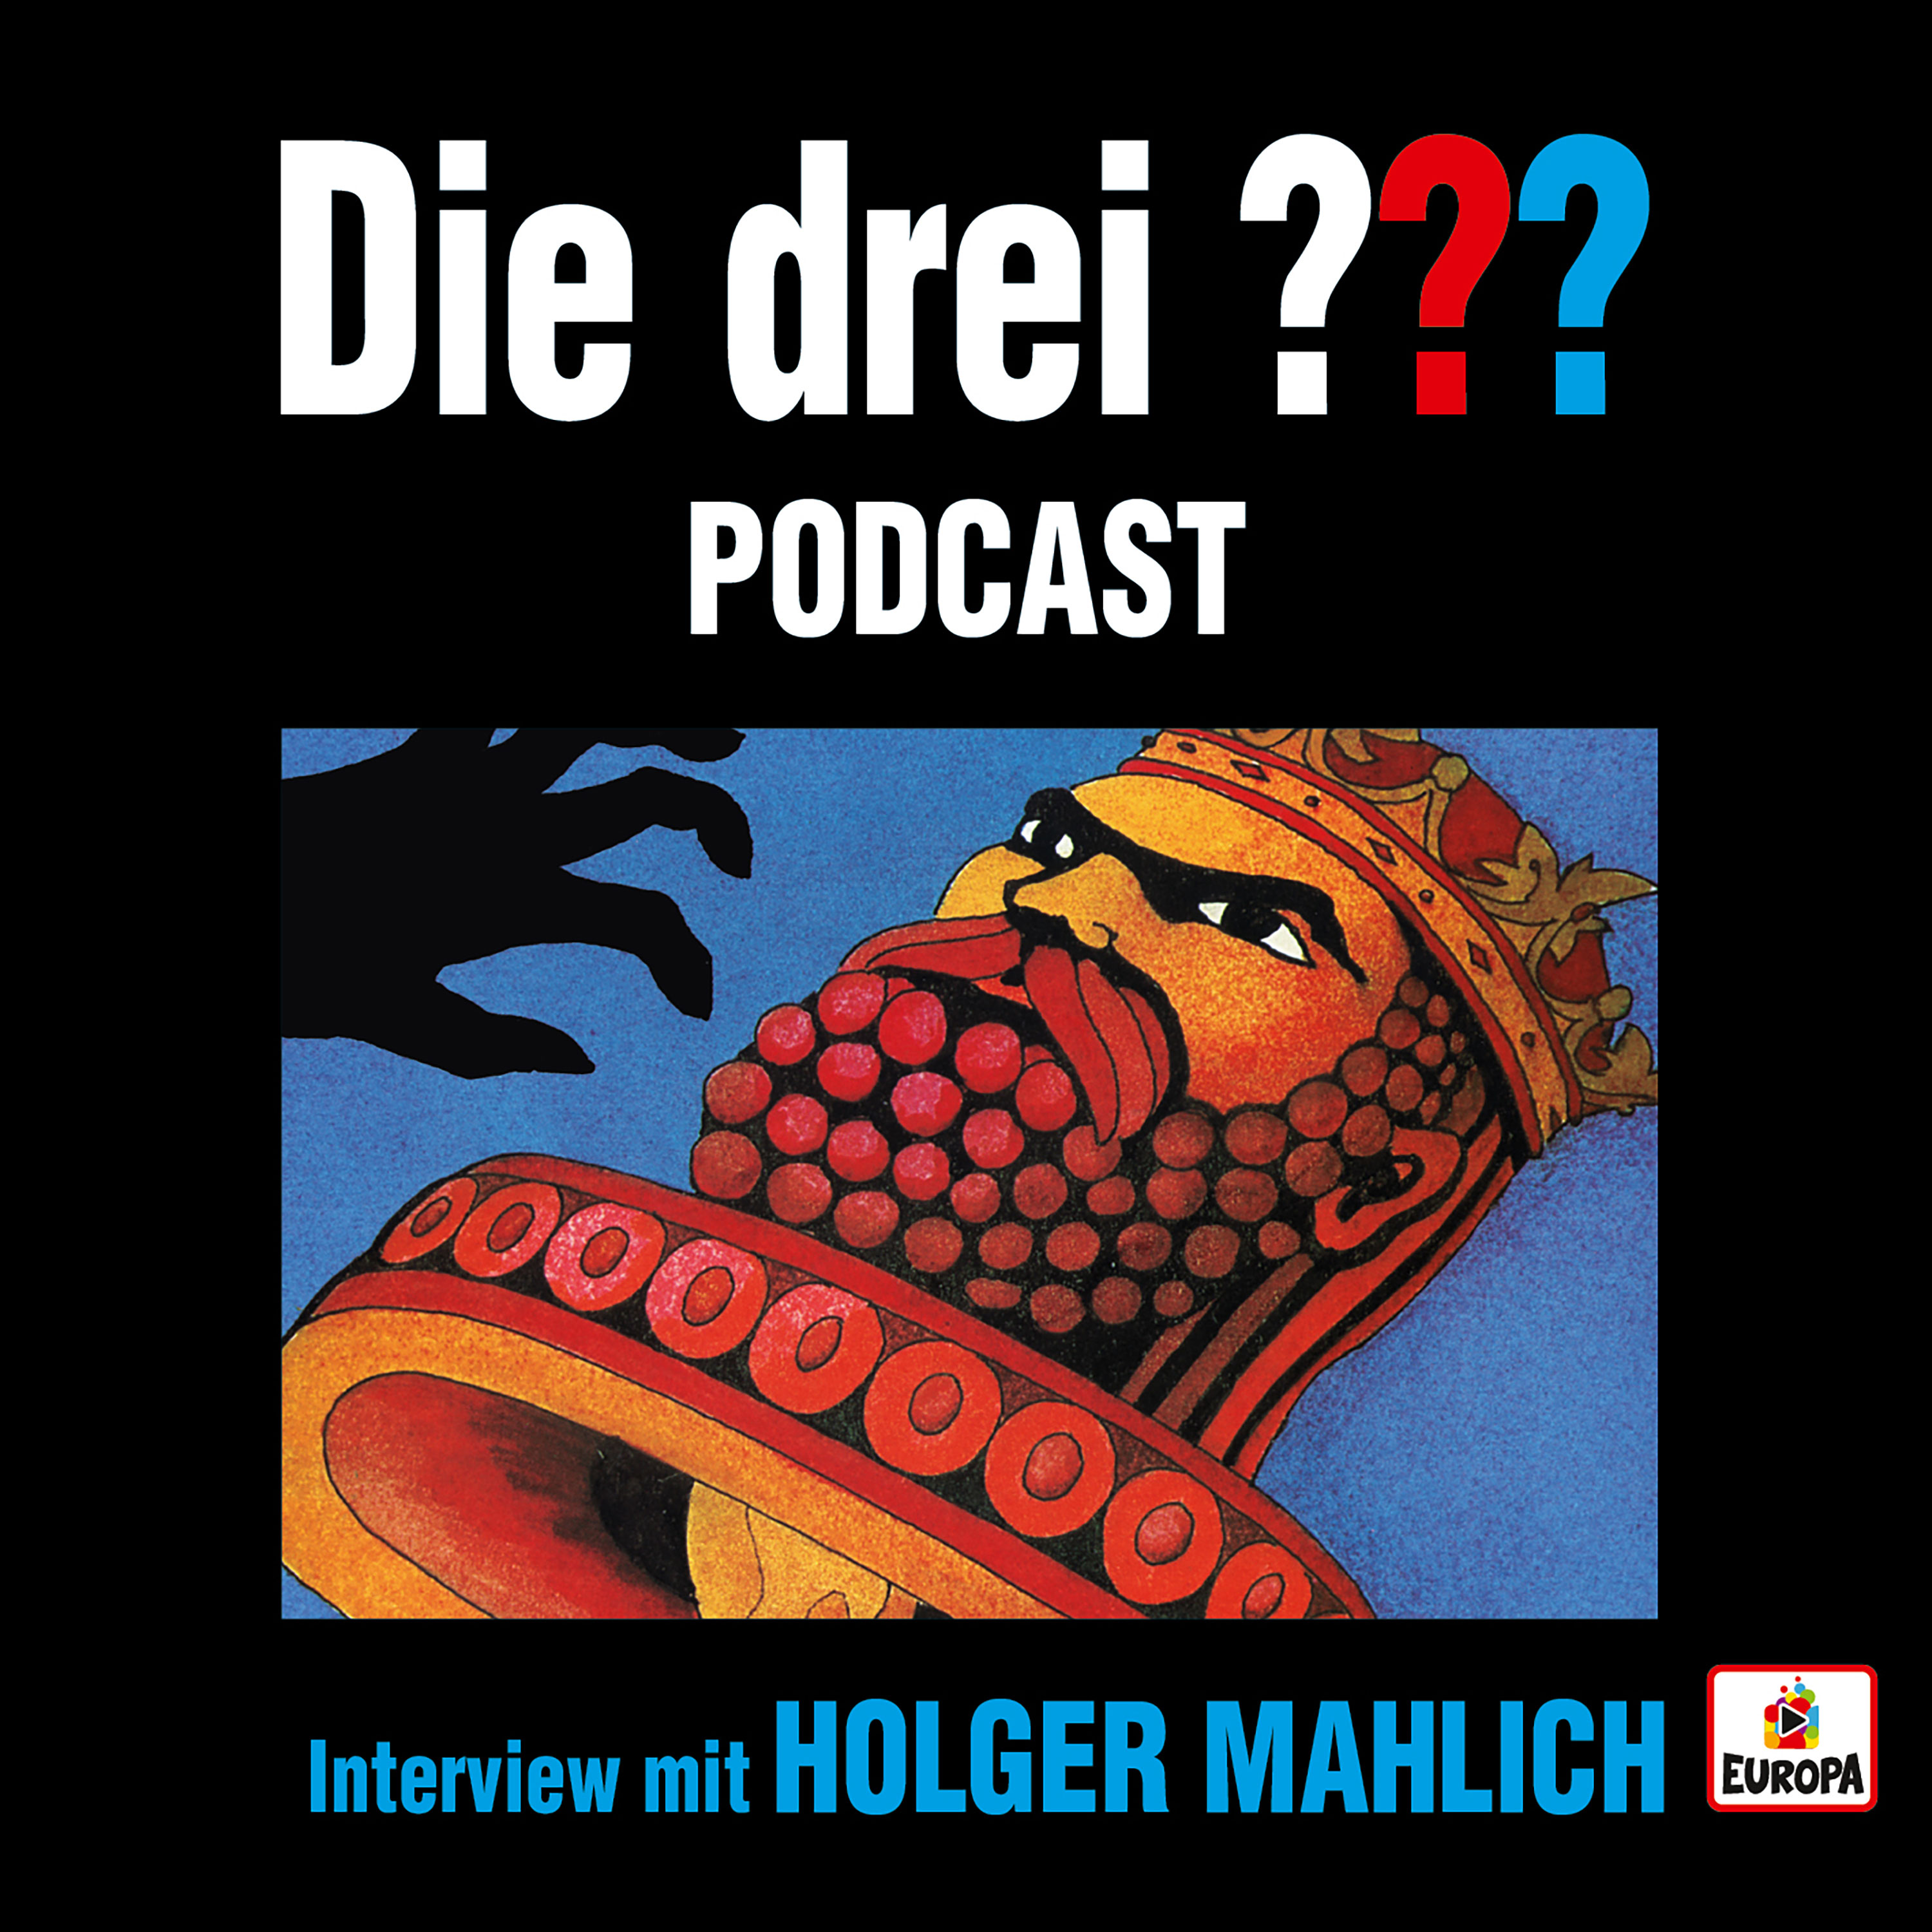 Podcast zum Hörbuch mit Holger Mahlich